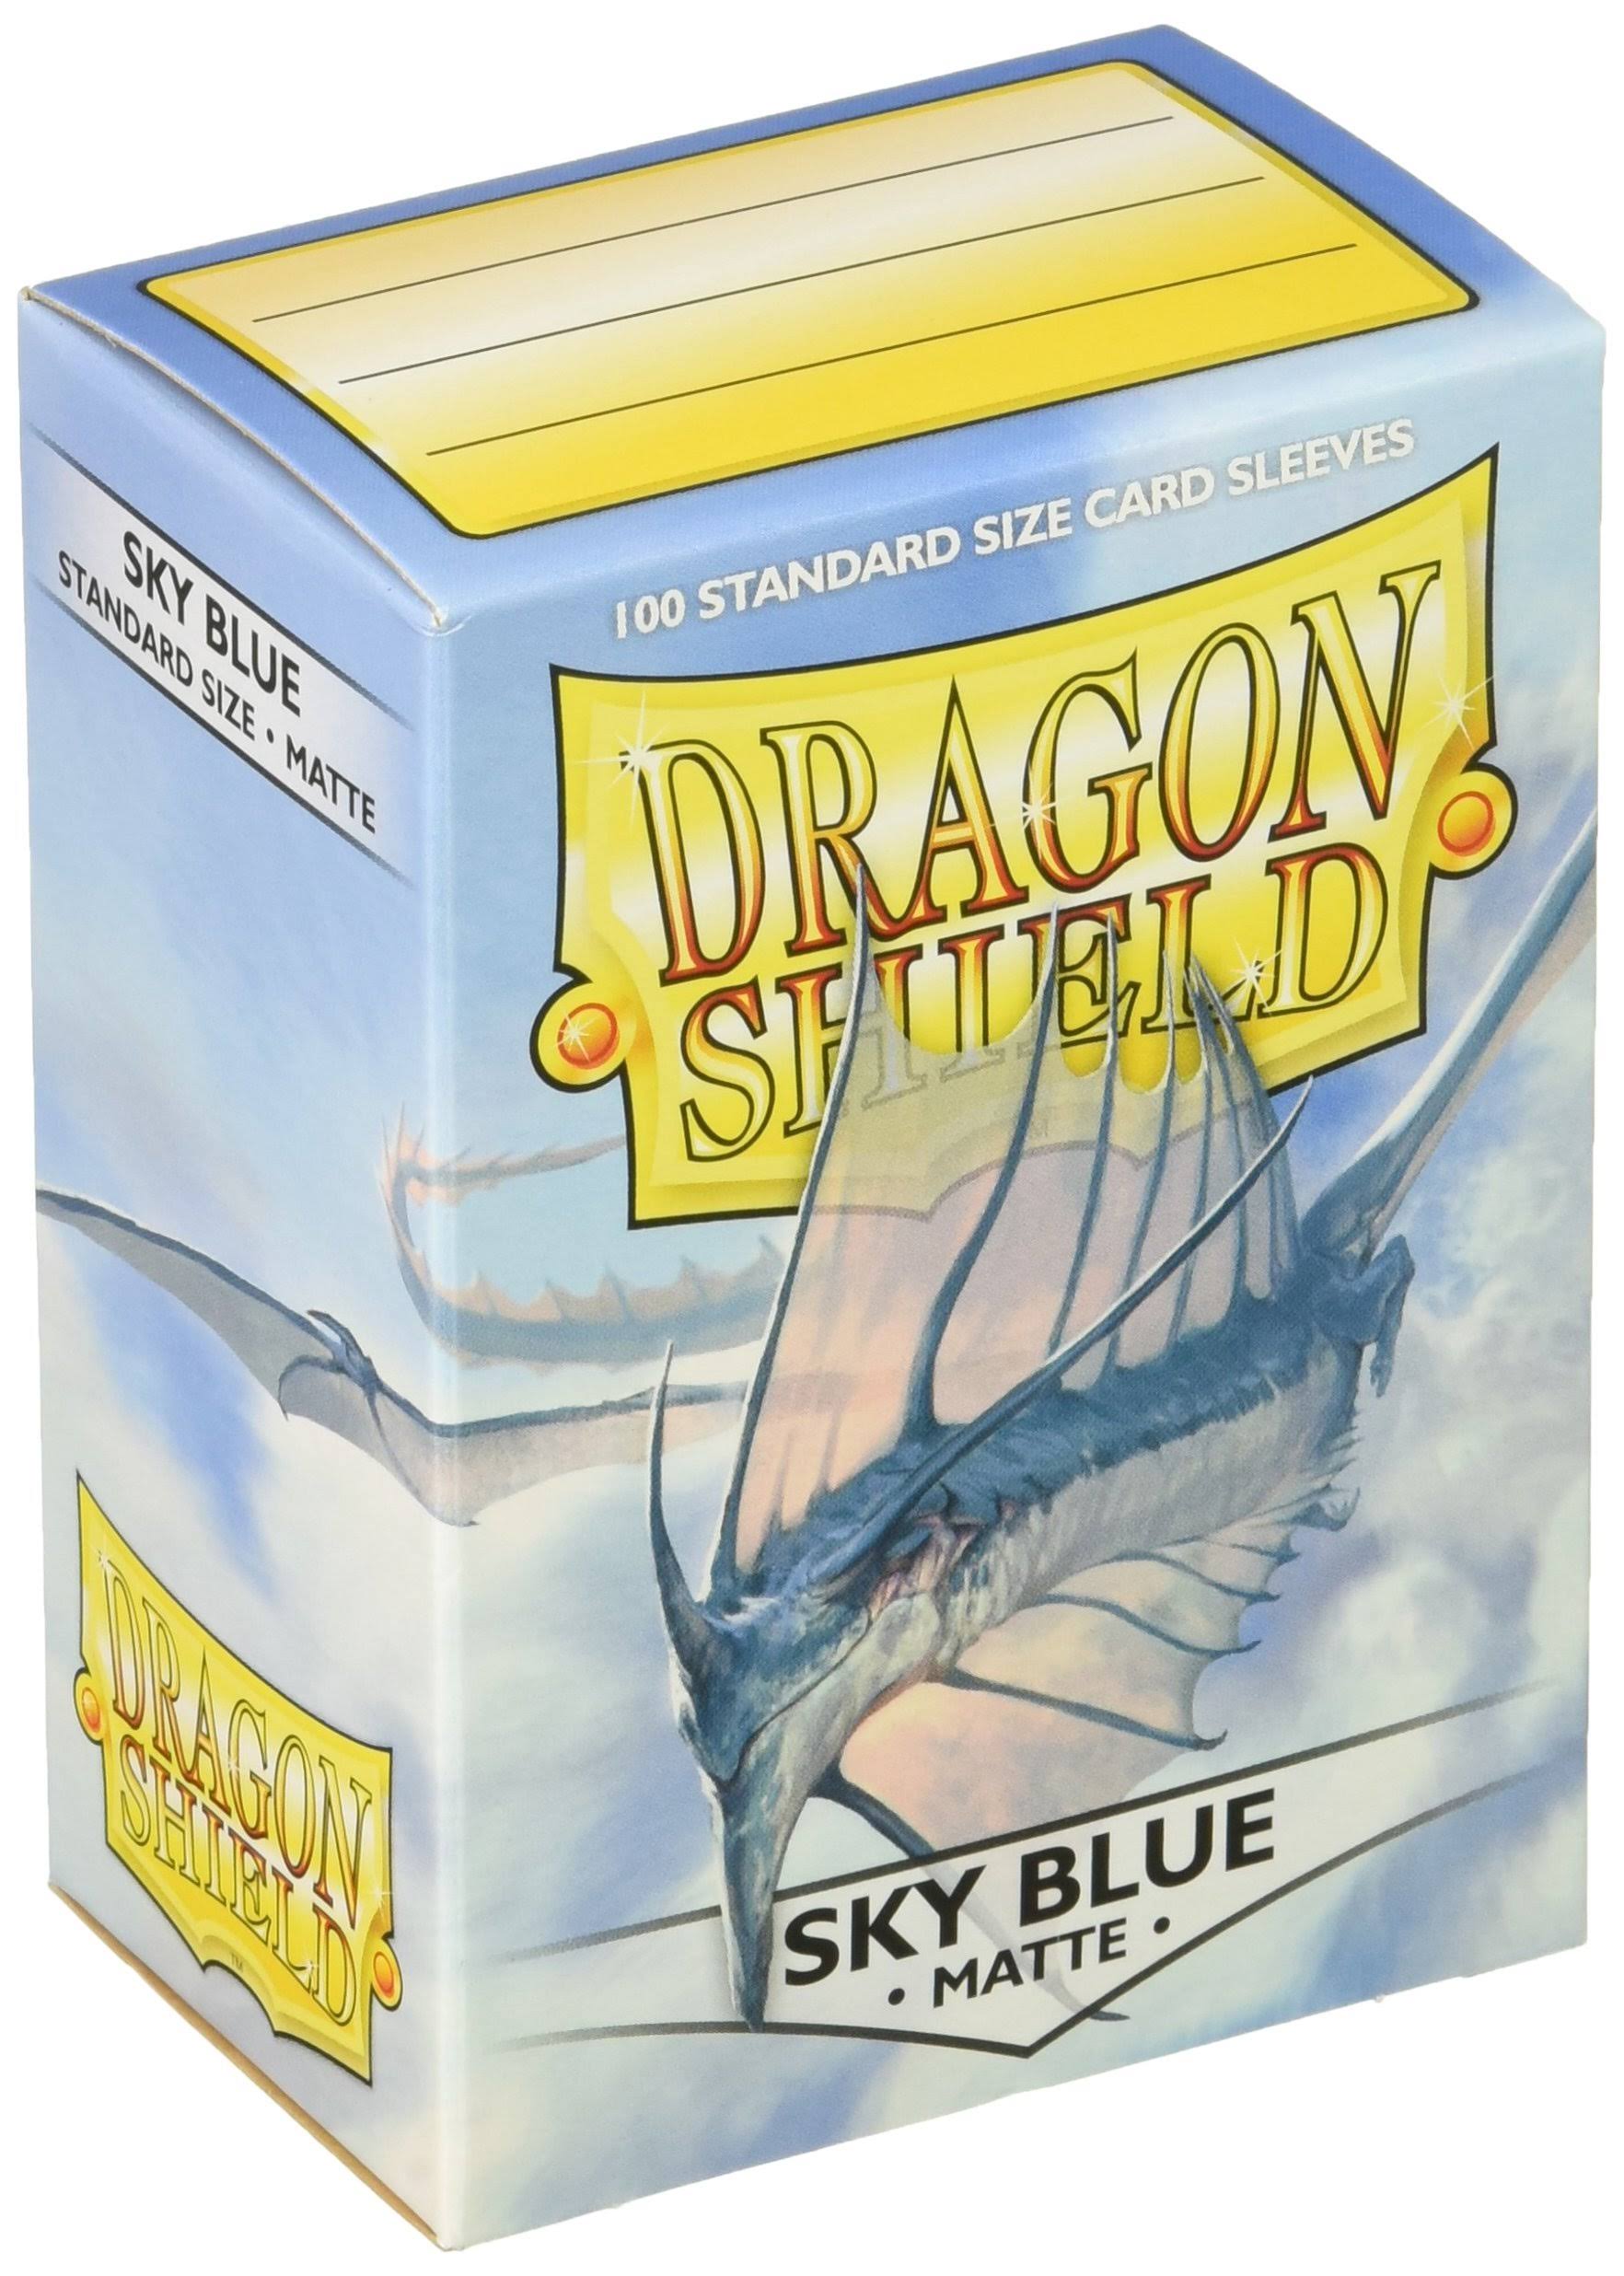 Dragon Shield Standard Size Card Sleeves - Matte Sky Blue, x100